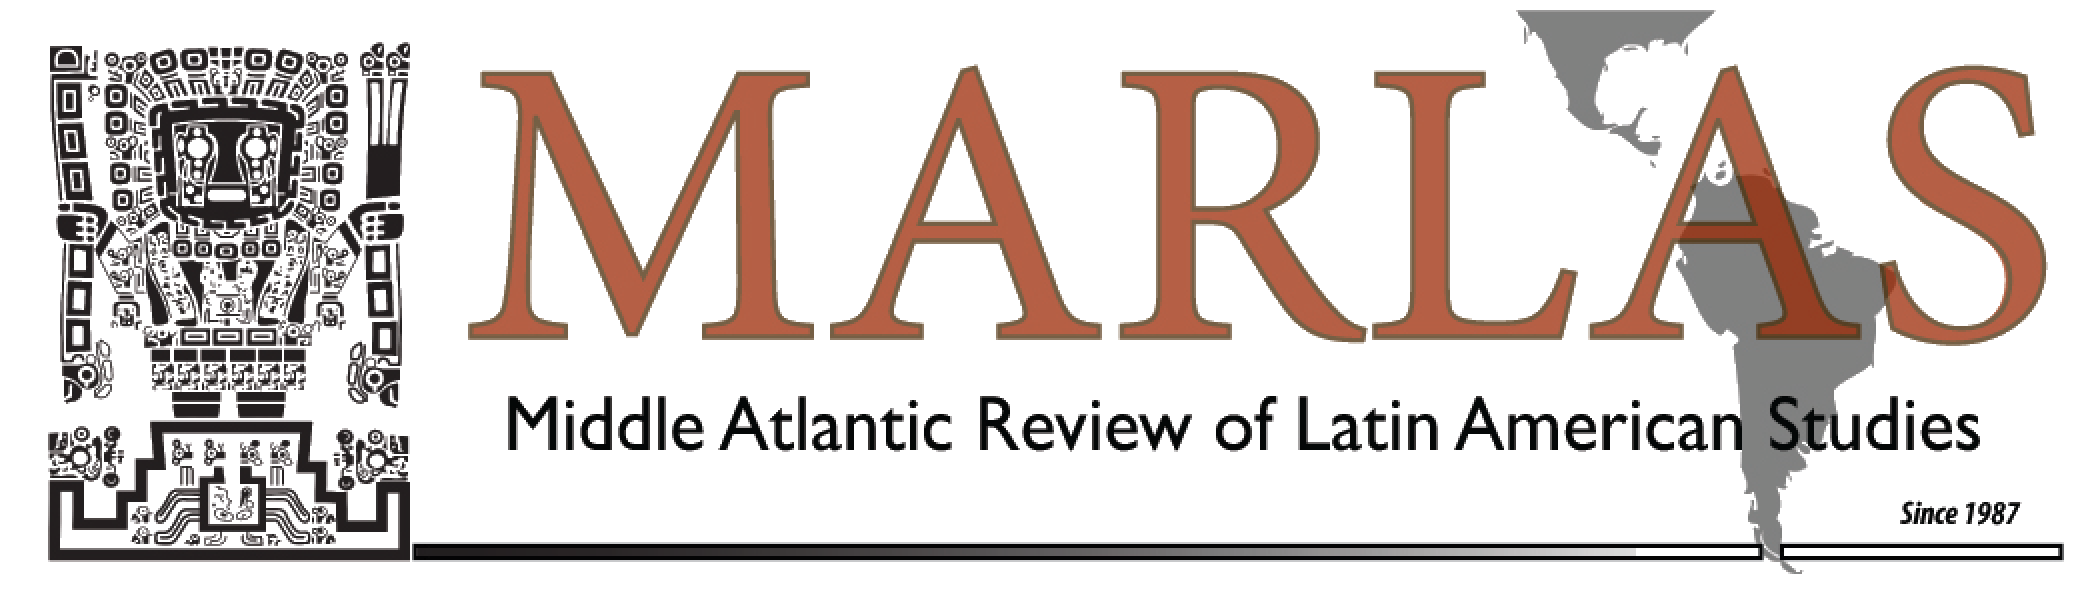 MARLAS Journal Logo